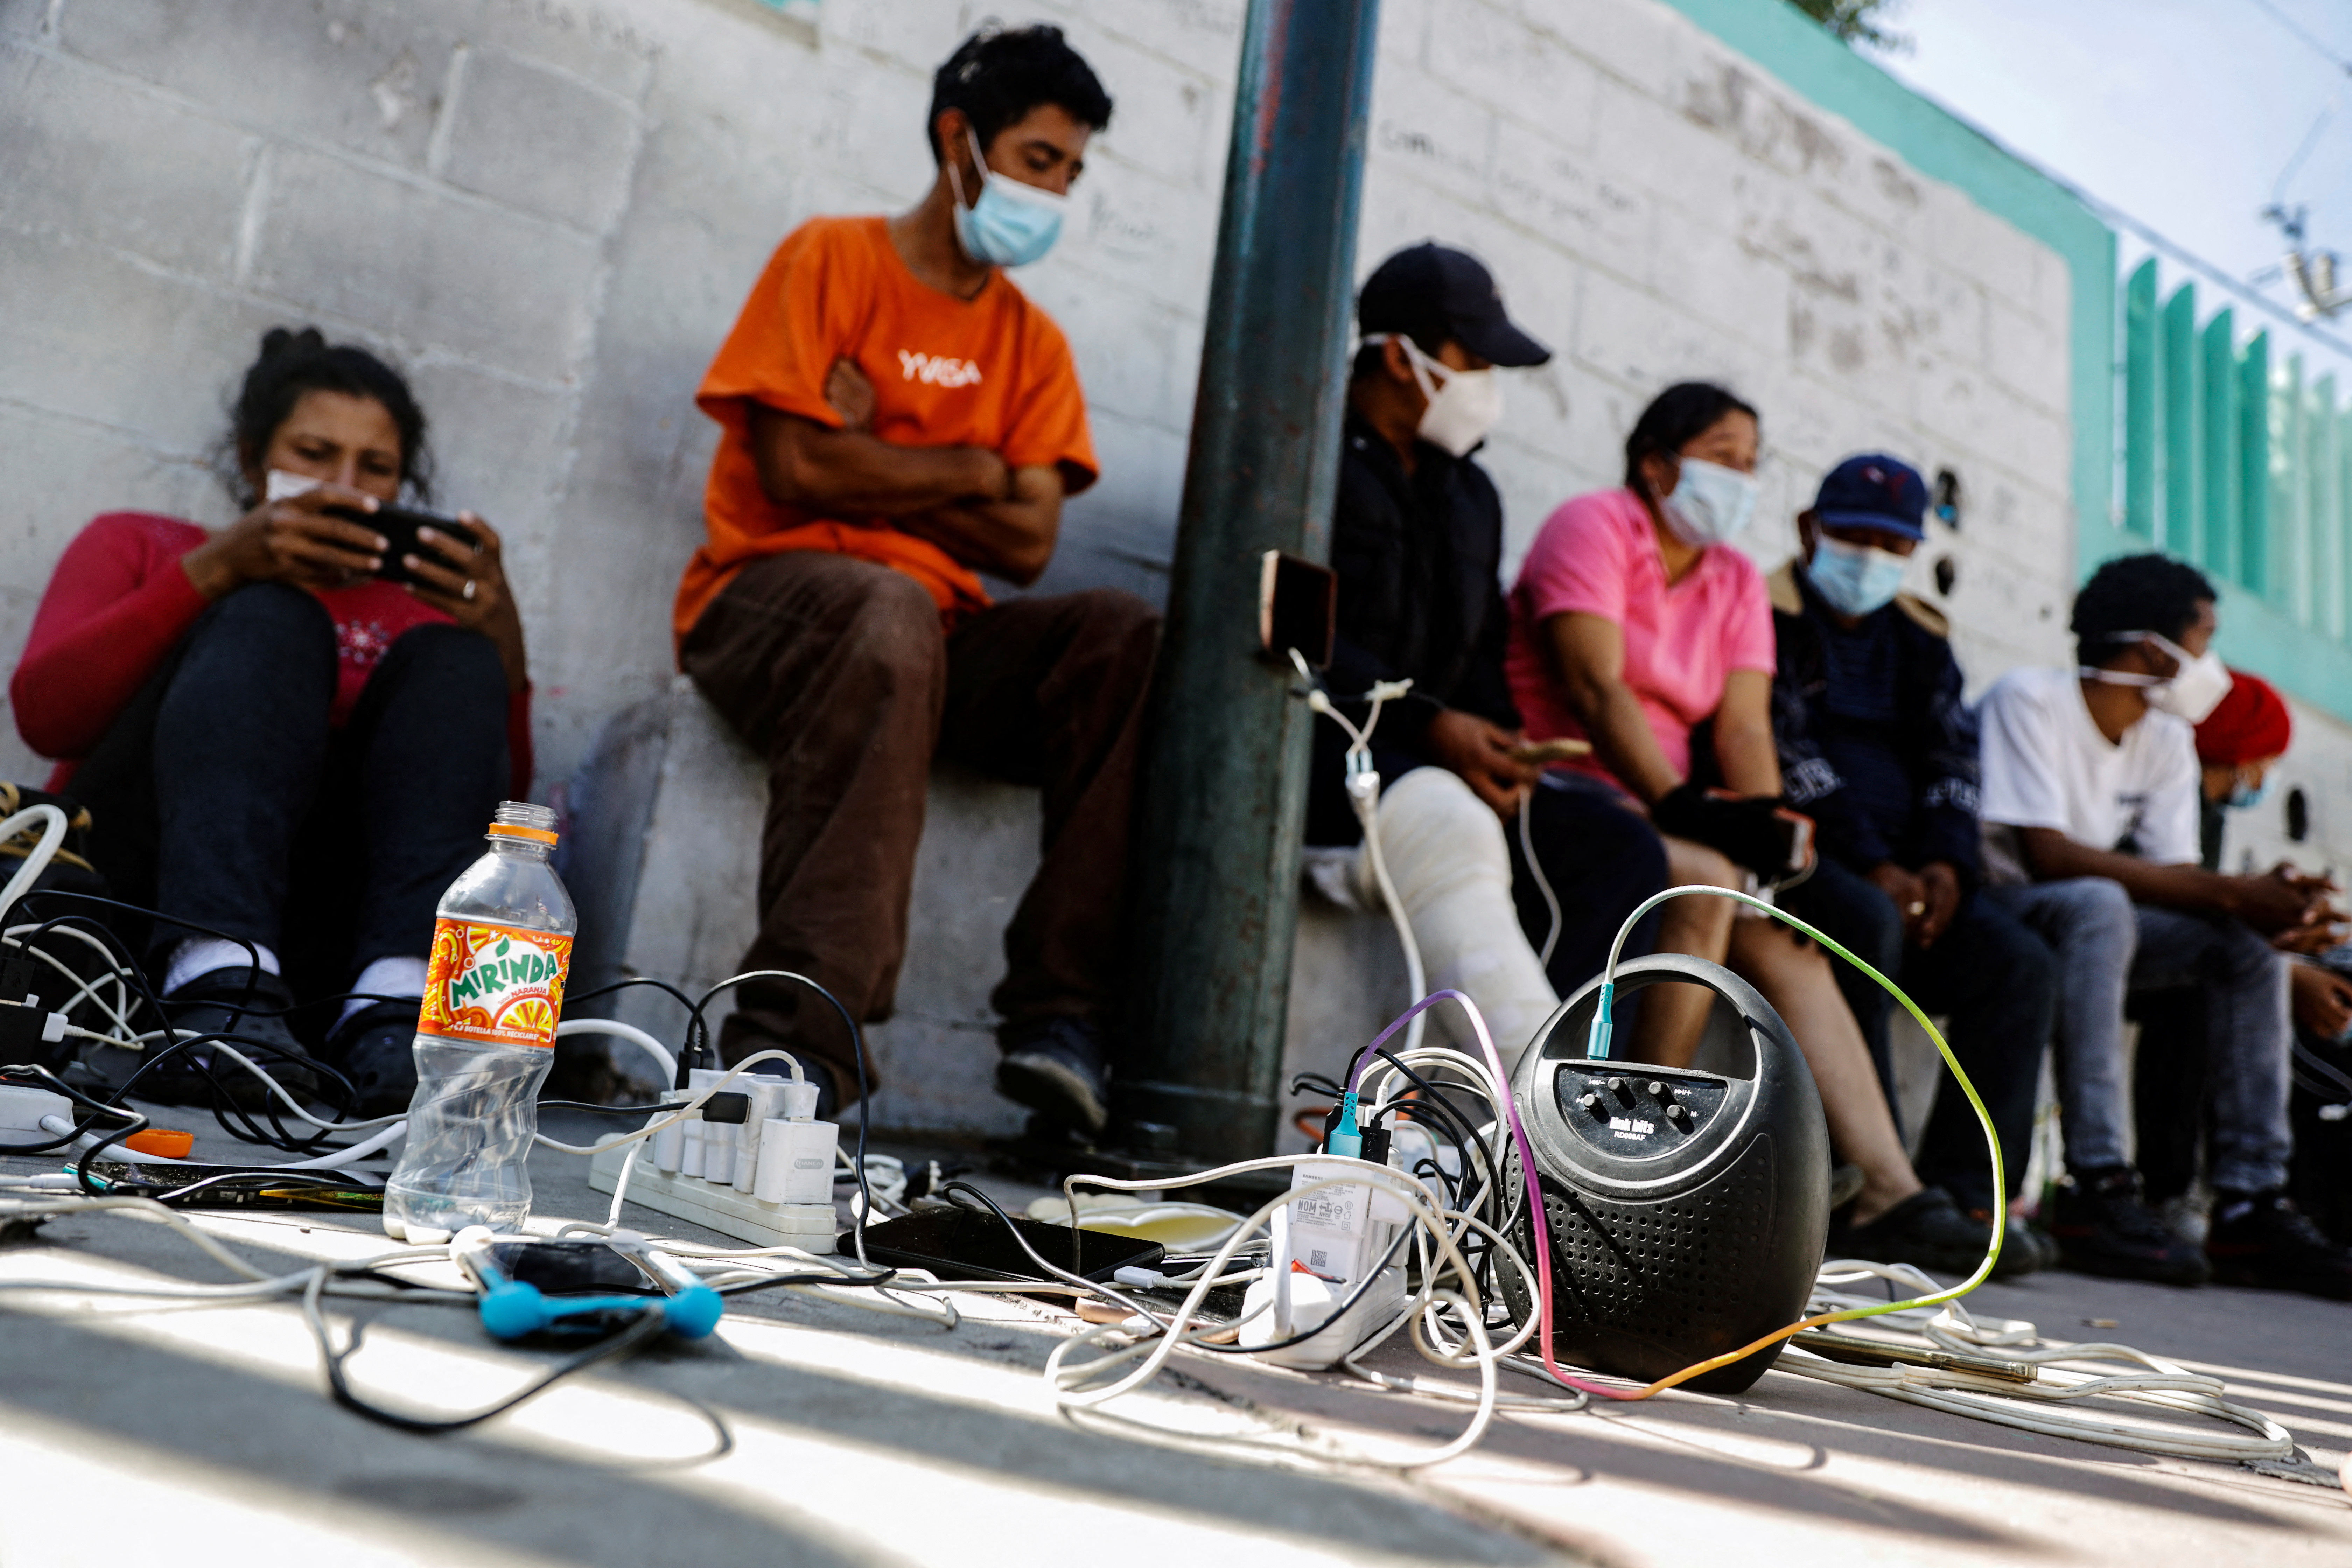 Migrant caravan arrive in Mexico City